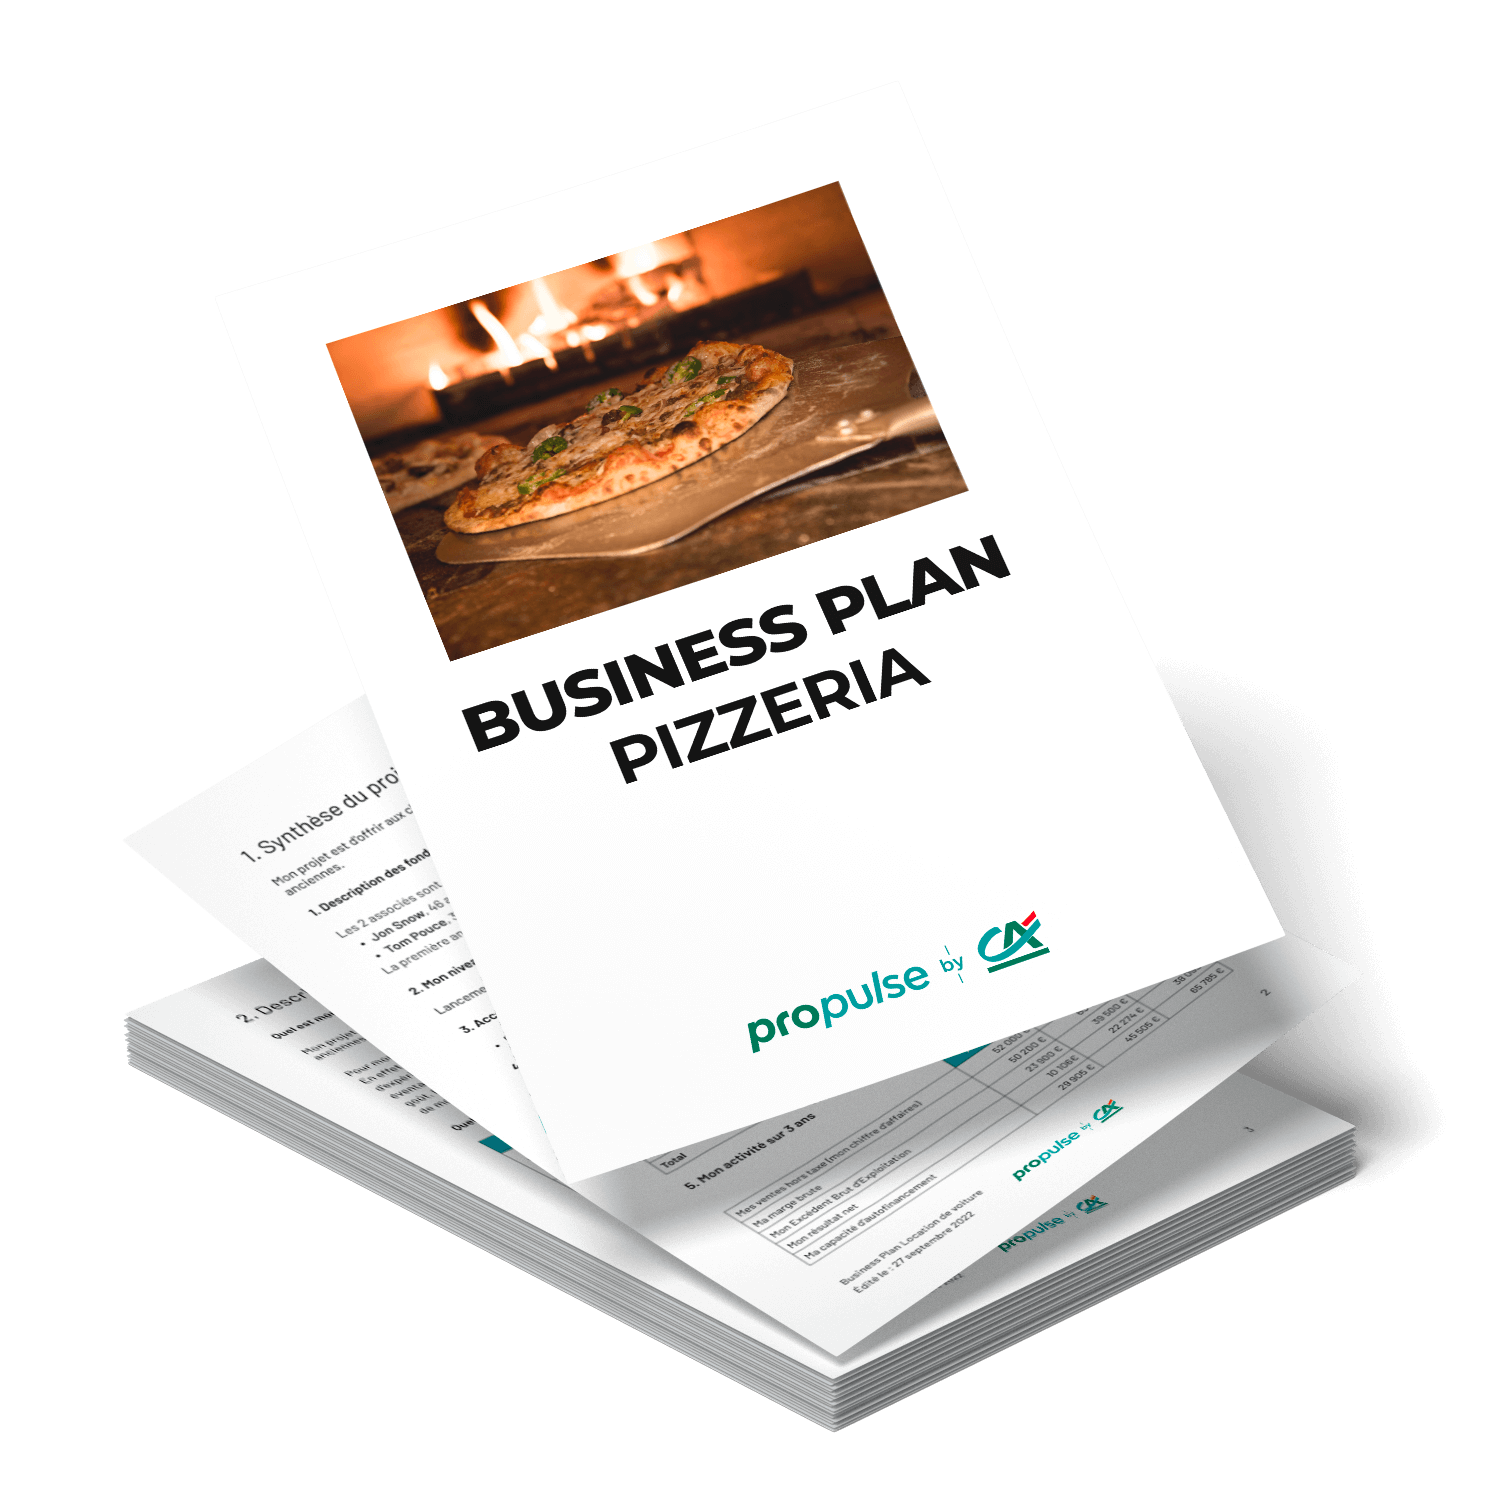 business plan pizzeria